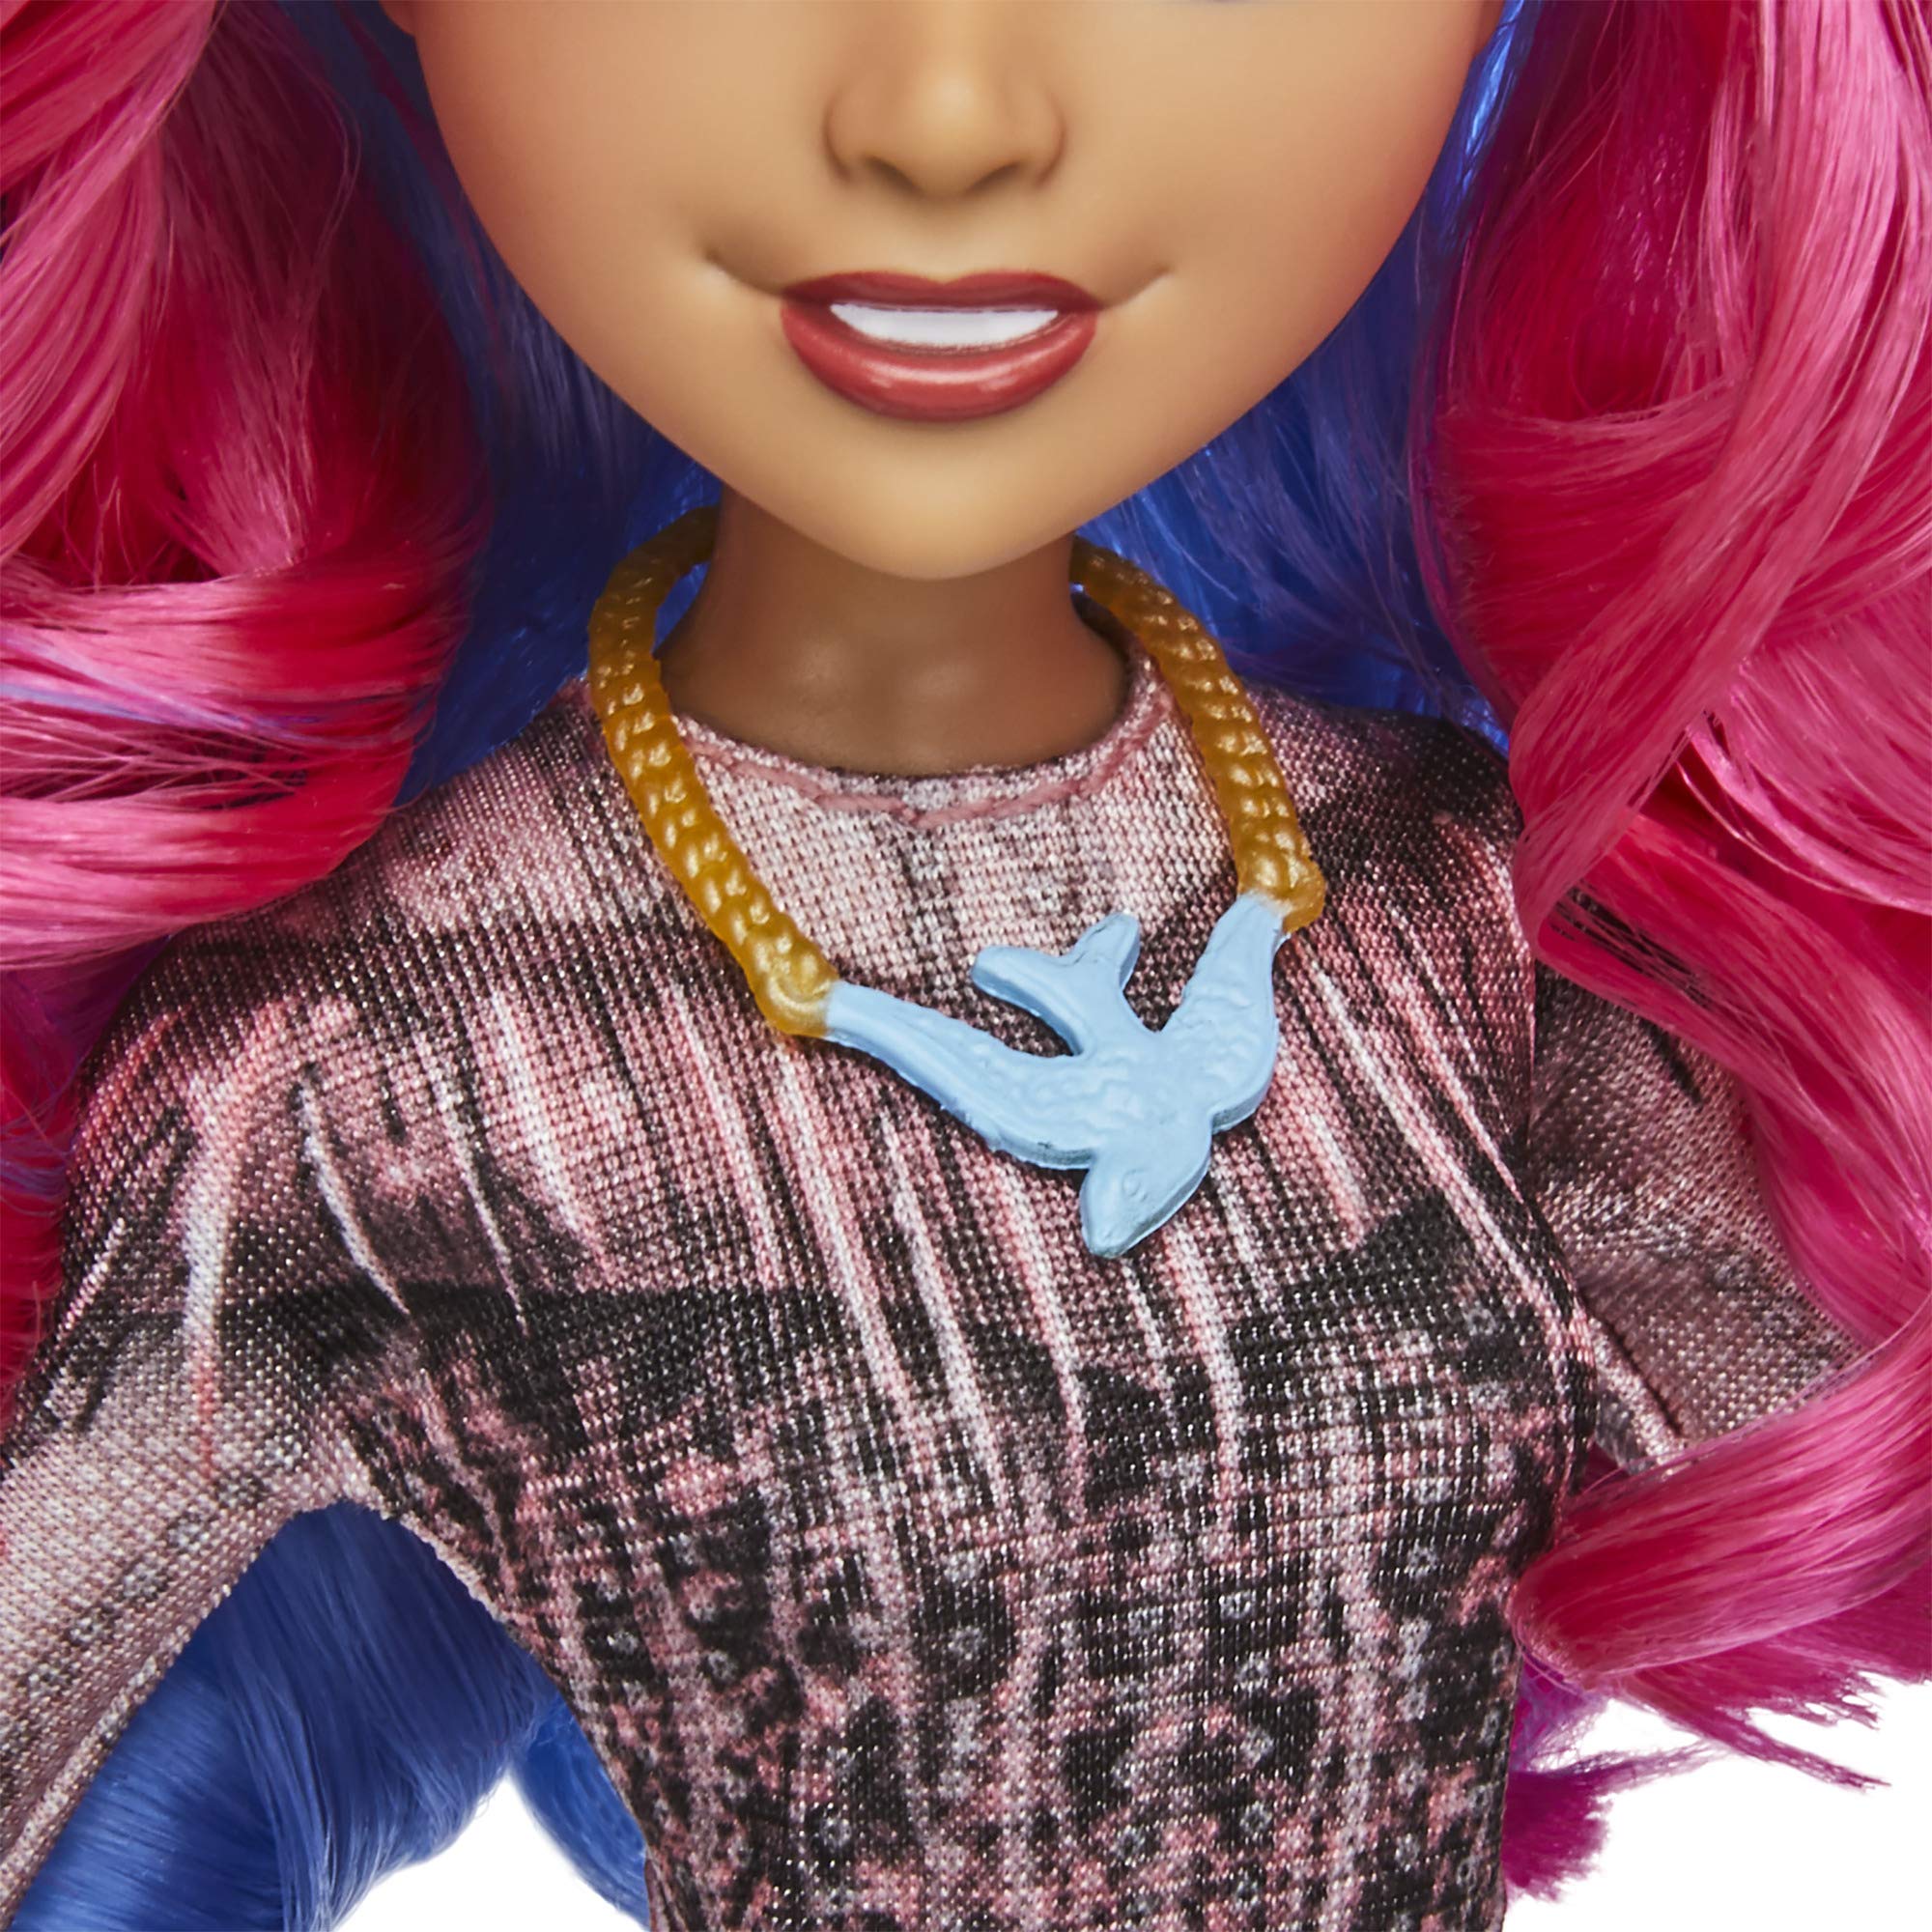 Disney Descendants Audrey Doll, Inspired by Disney's Descendants 3, Fashion Doll for Girls